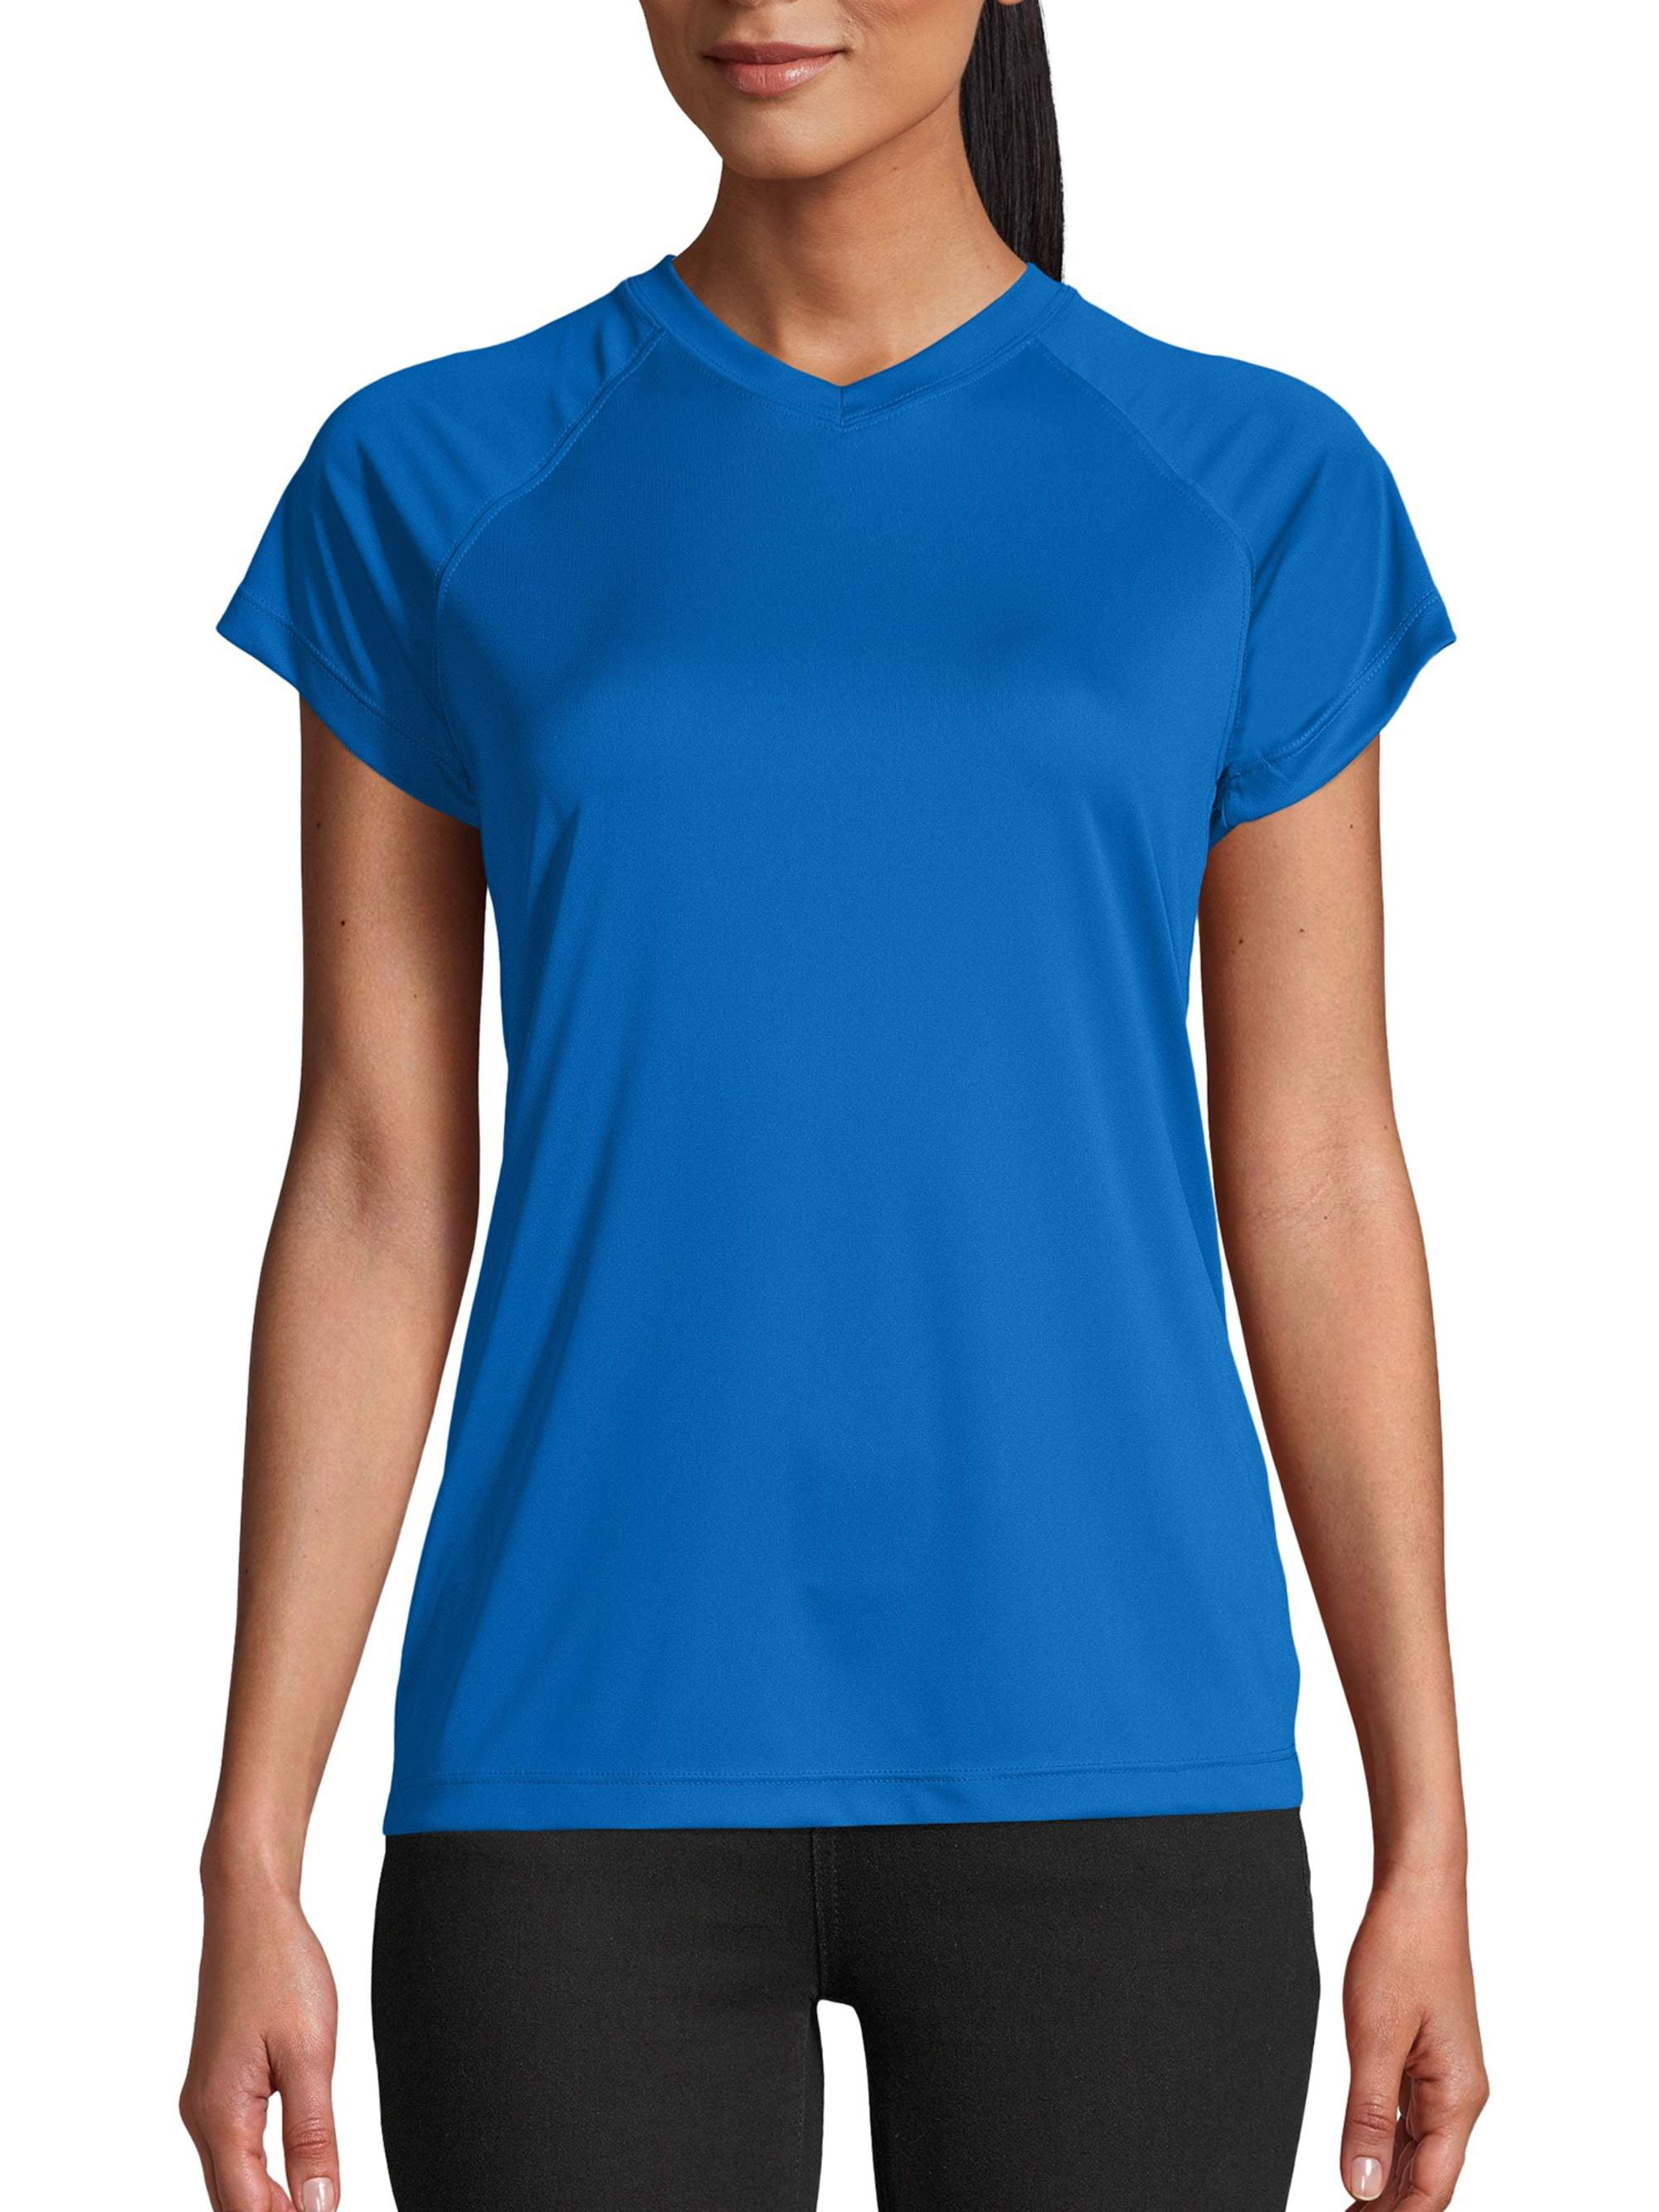 Champion Women V-Neck Cotton Turquoise Blue Shirt Size Medium RN 15763